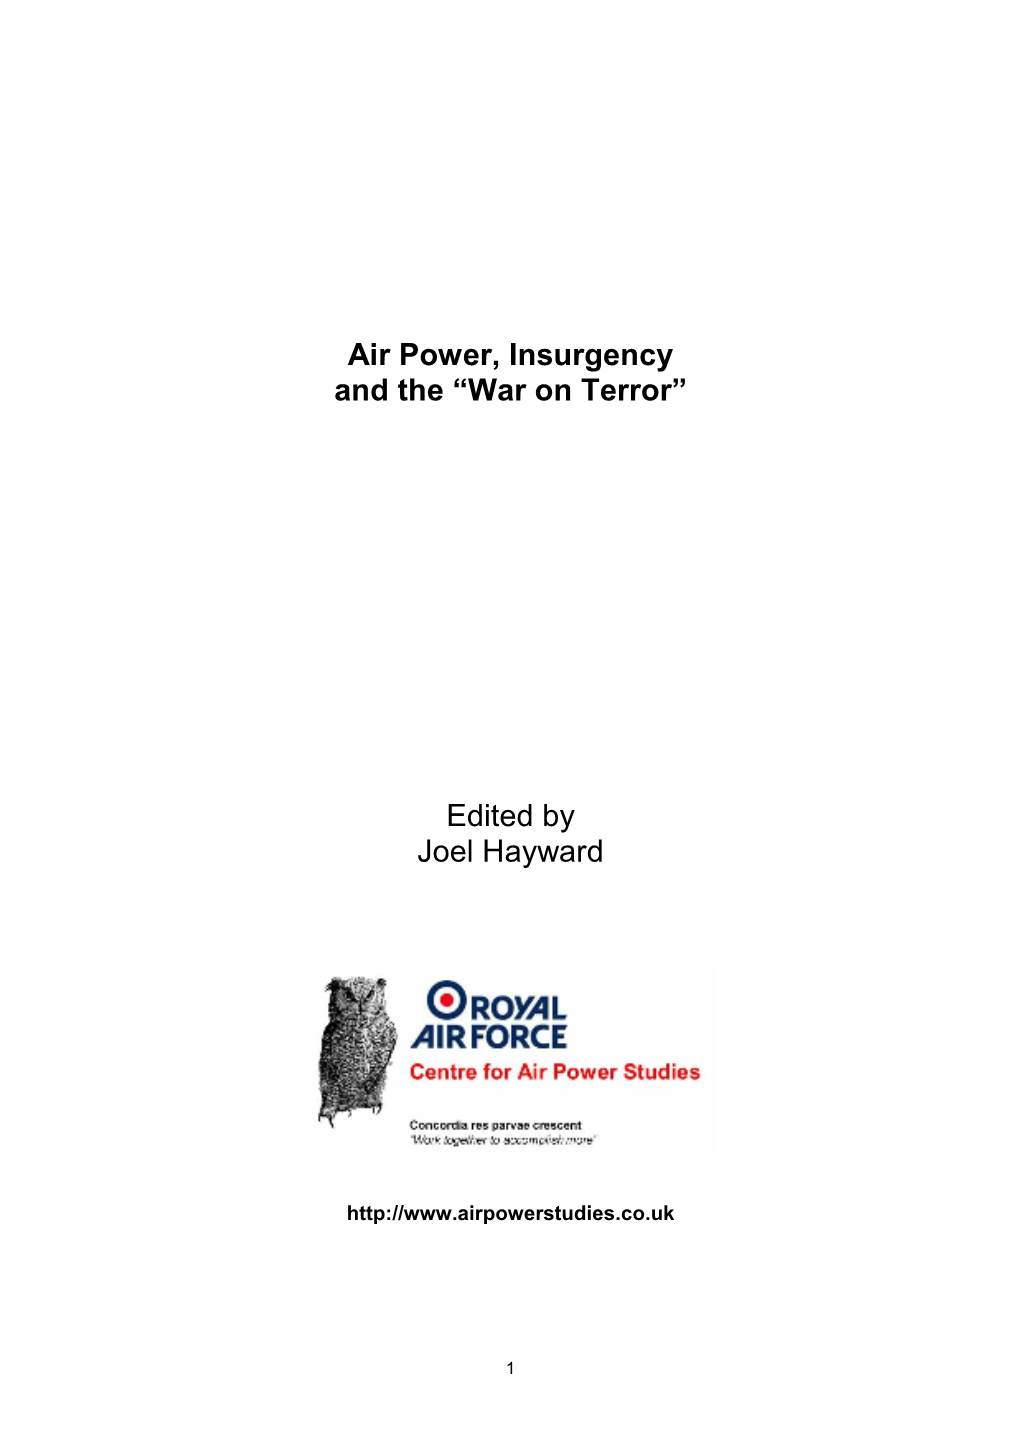 Air Power, Insurgency and the “War on Terror” Edited by Joel Hayward